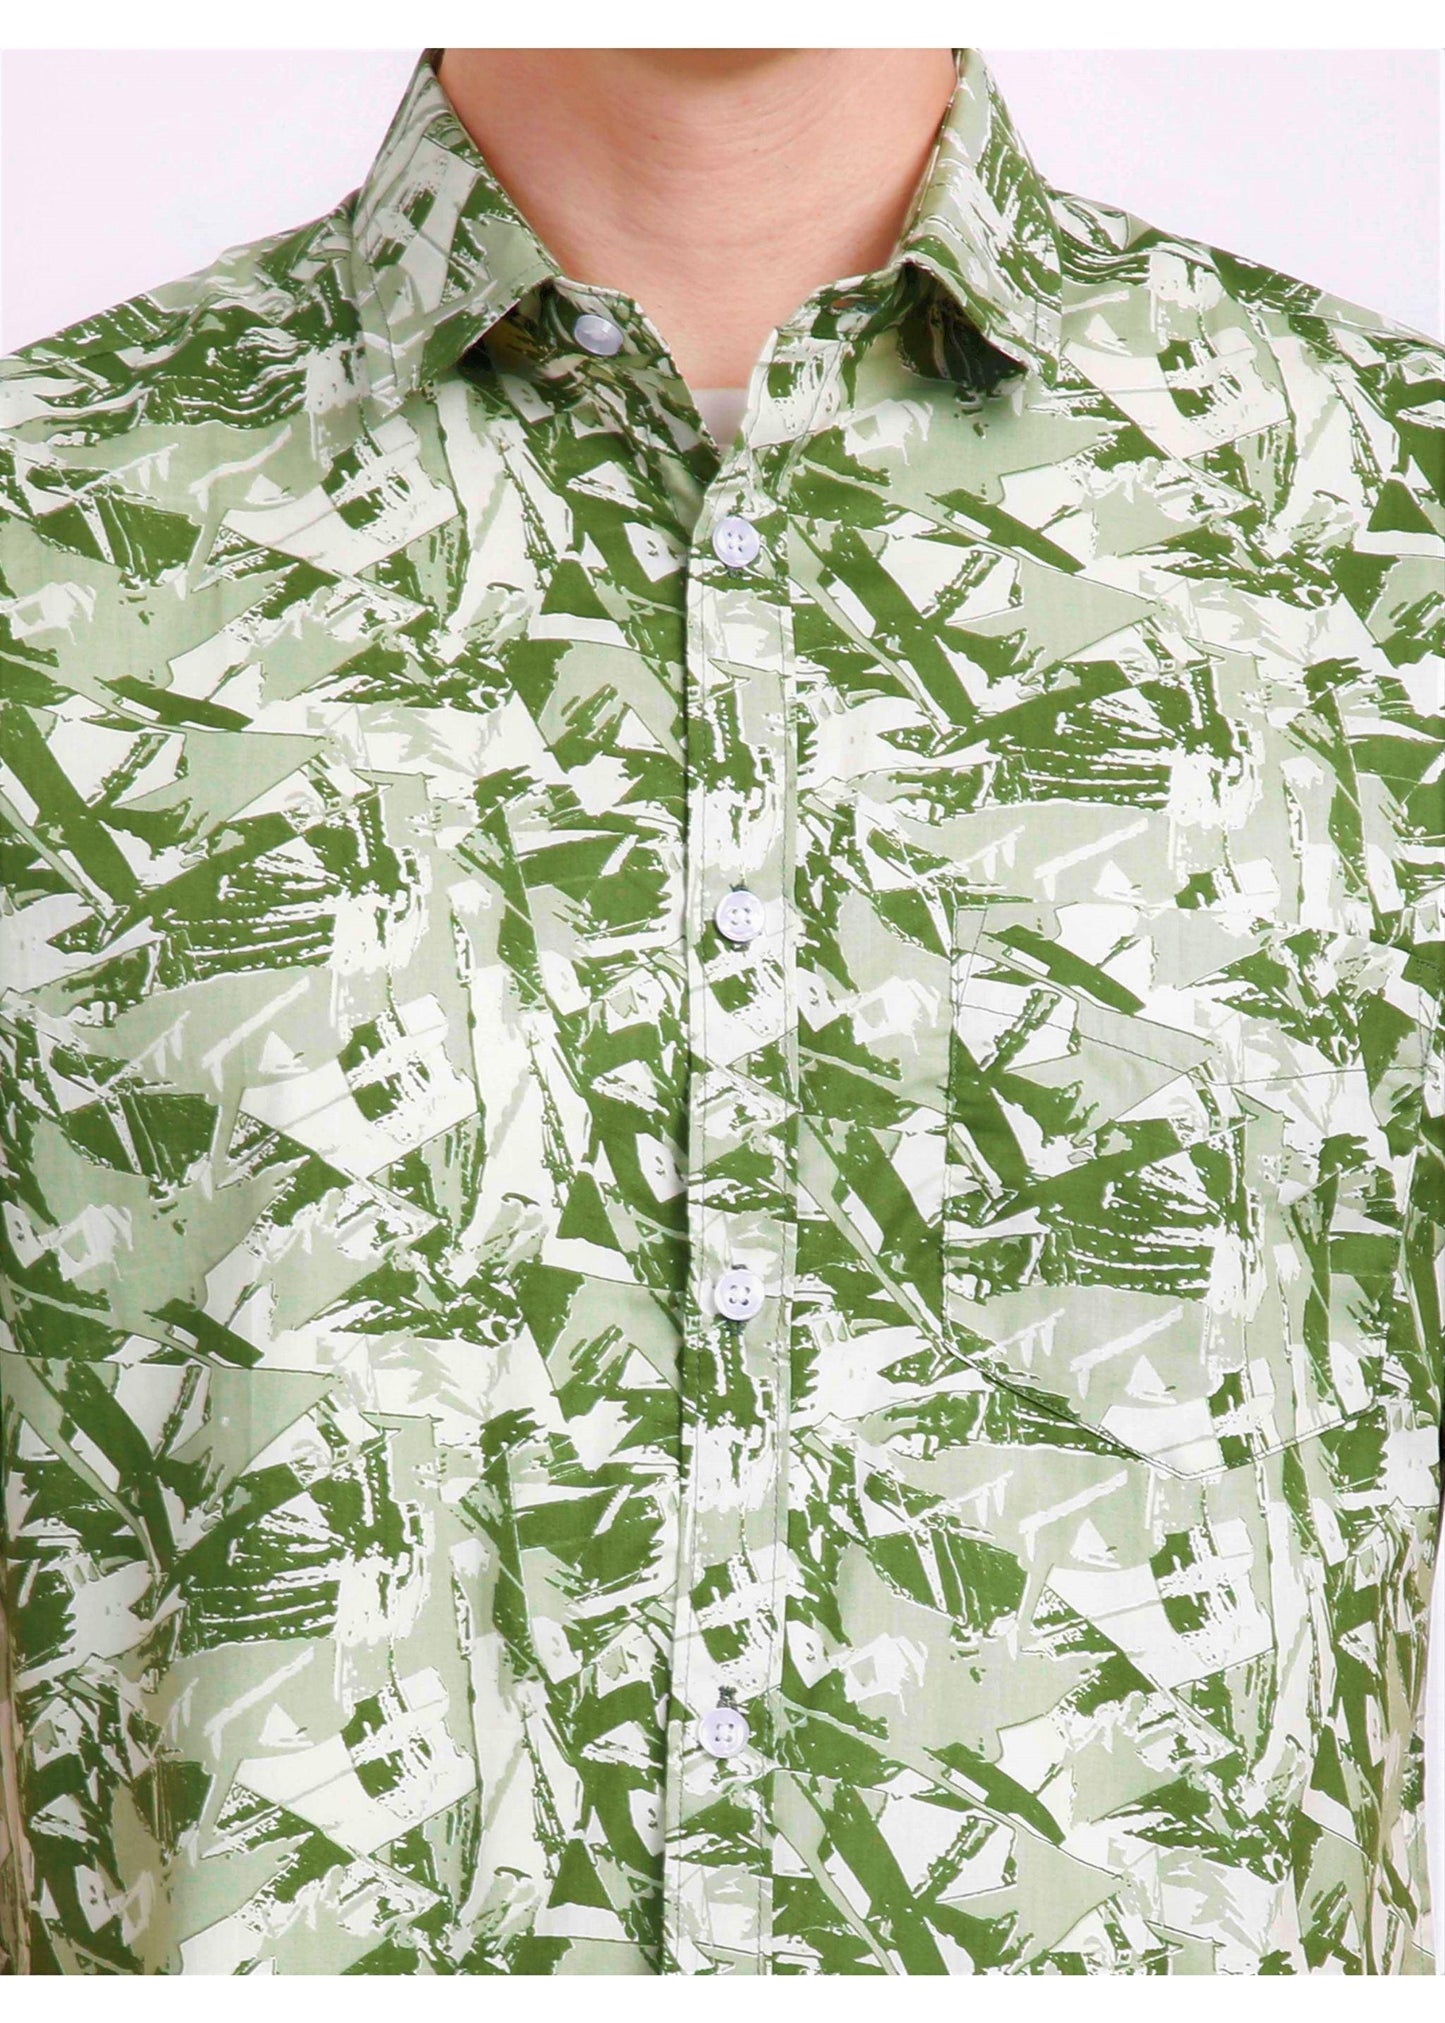 Tusok-mojitoVacation-Printed Shirtimage-Green Zigzag (6)